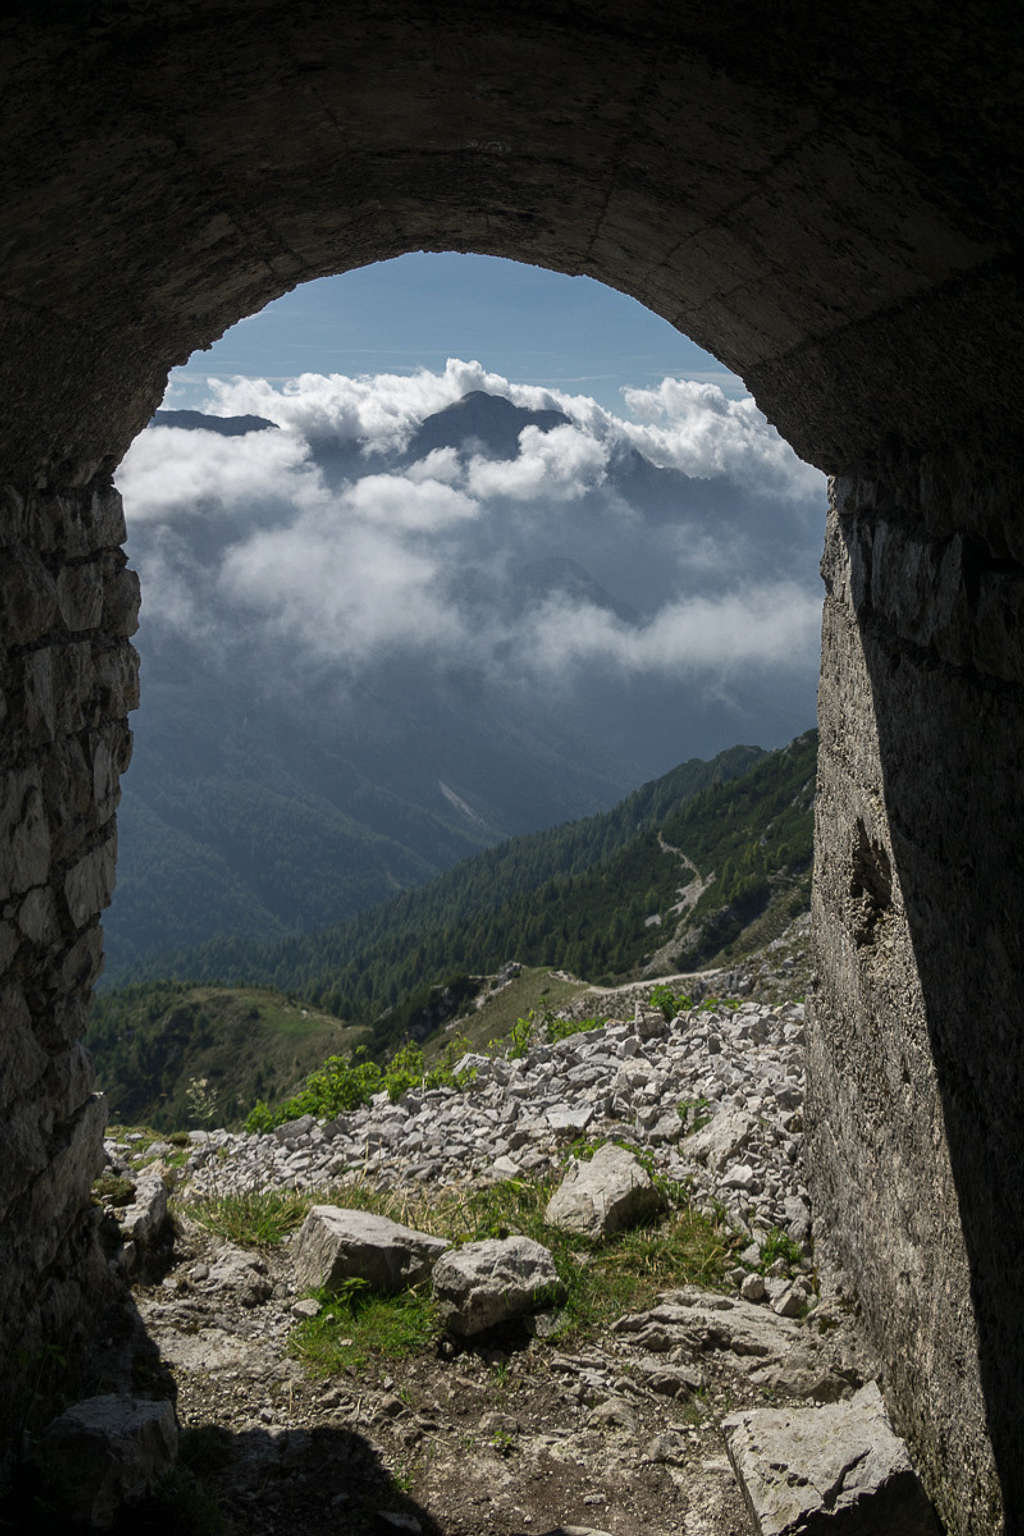 Monte Cimone seen through a WW I tunnel